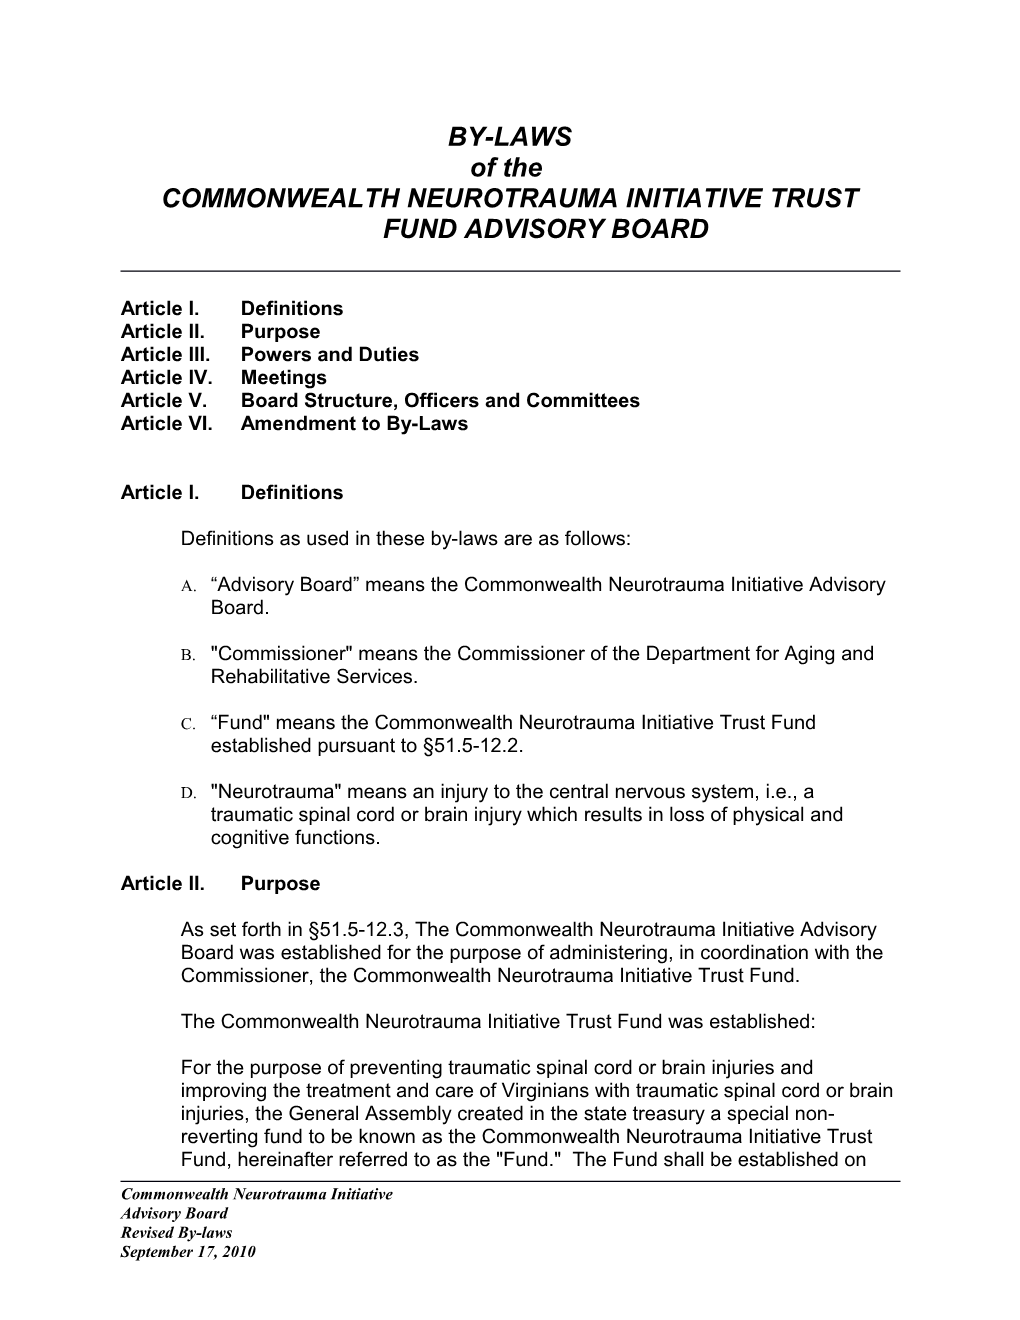 Commonwealth Neurotrauma Initiative Trust Fund Advisory Board